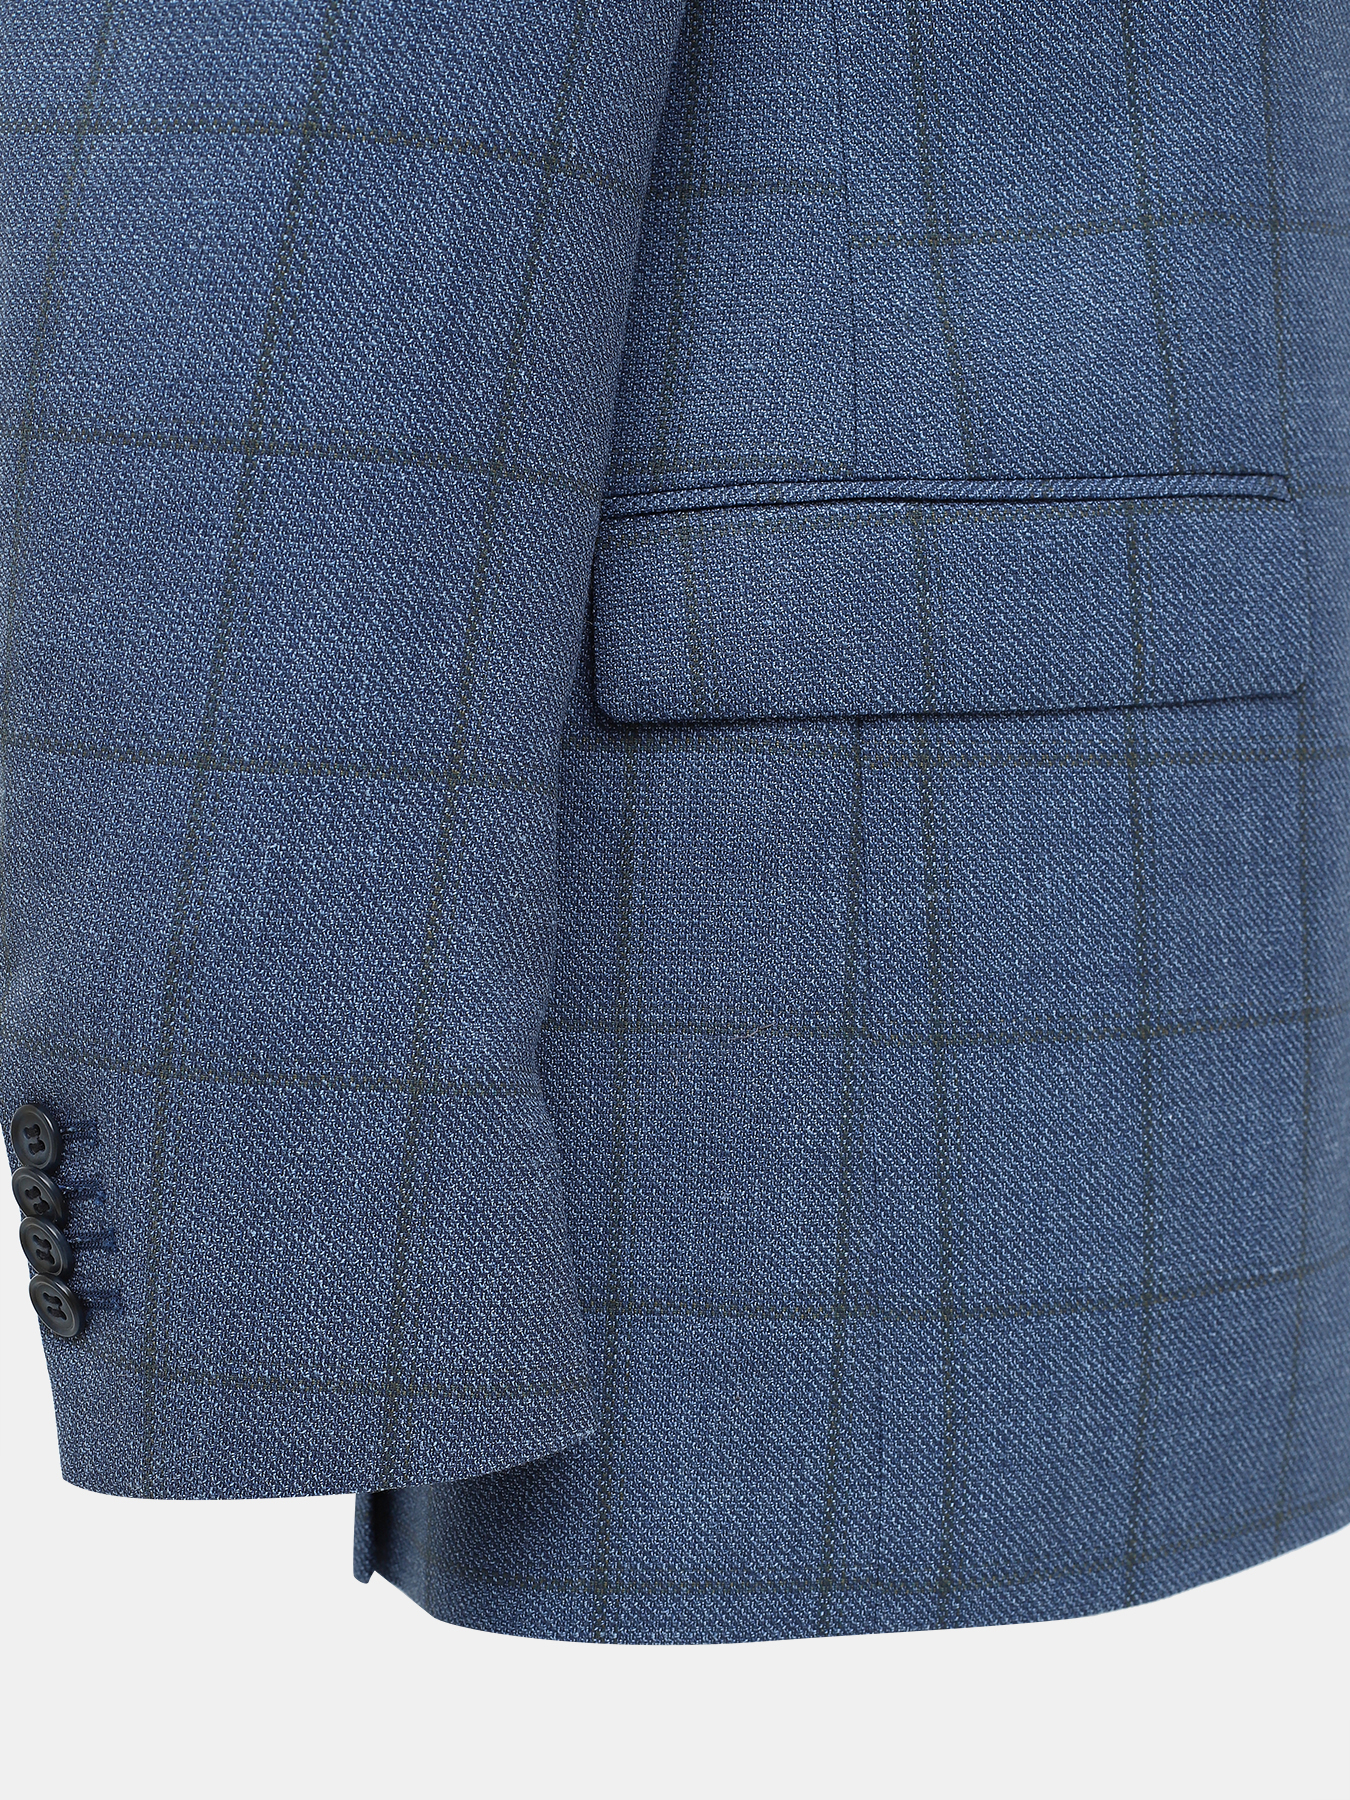 Пиджак Alessandro Manzoni 421118-379, цвет синий, размер 58 - фото 2